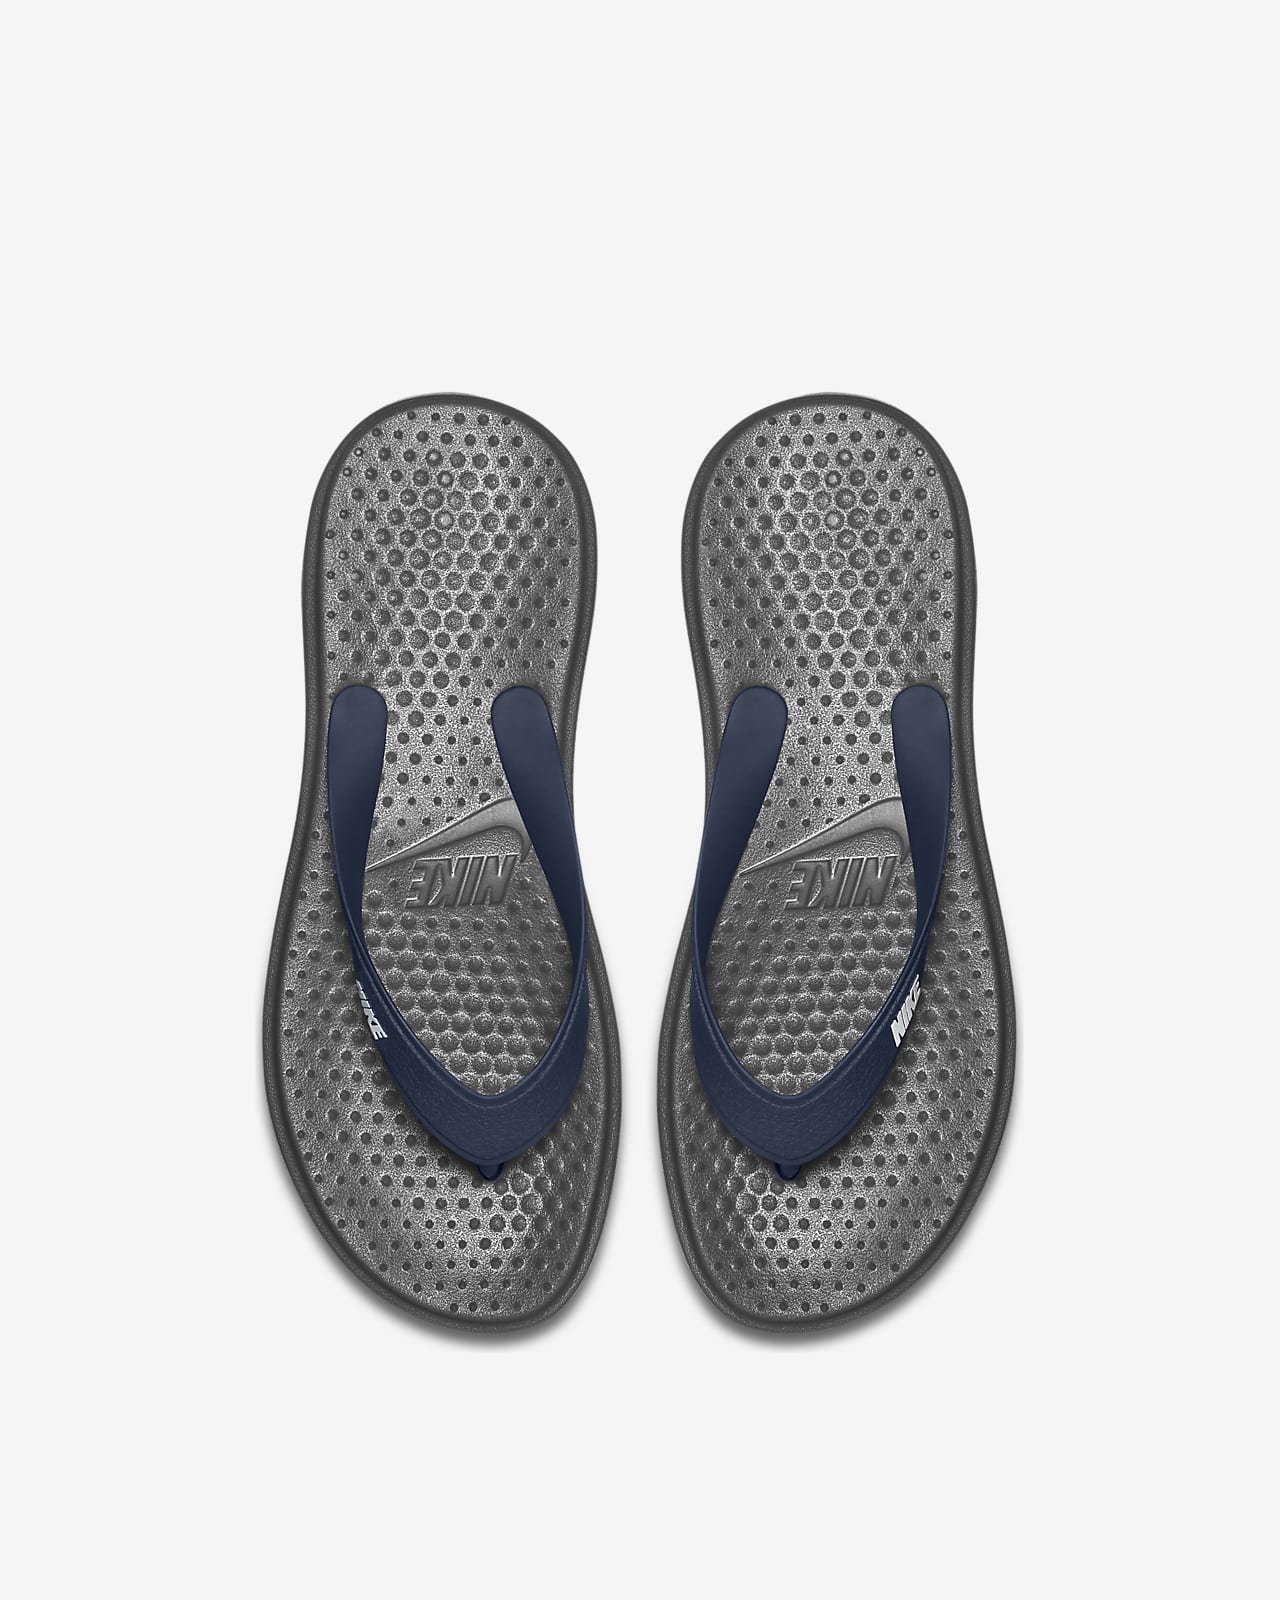 Nike Solay Herren-Flip-Flops